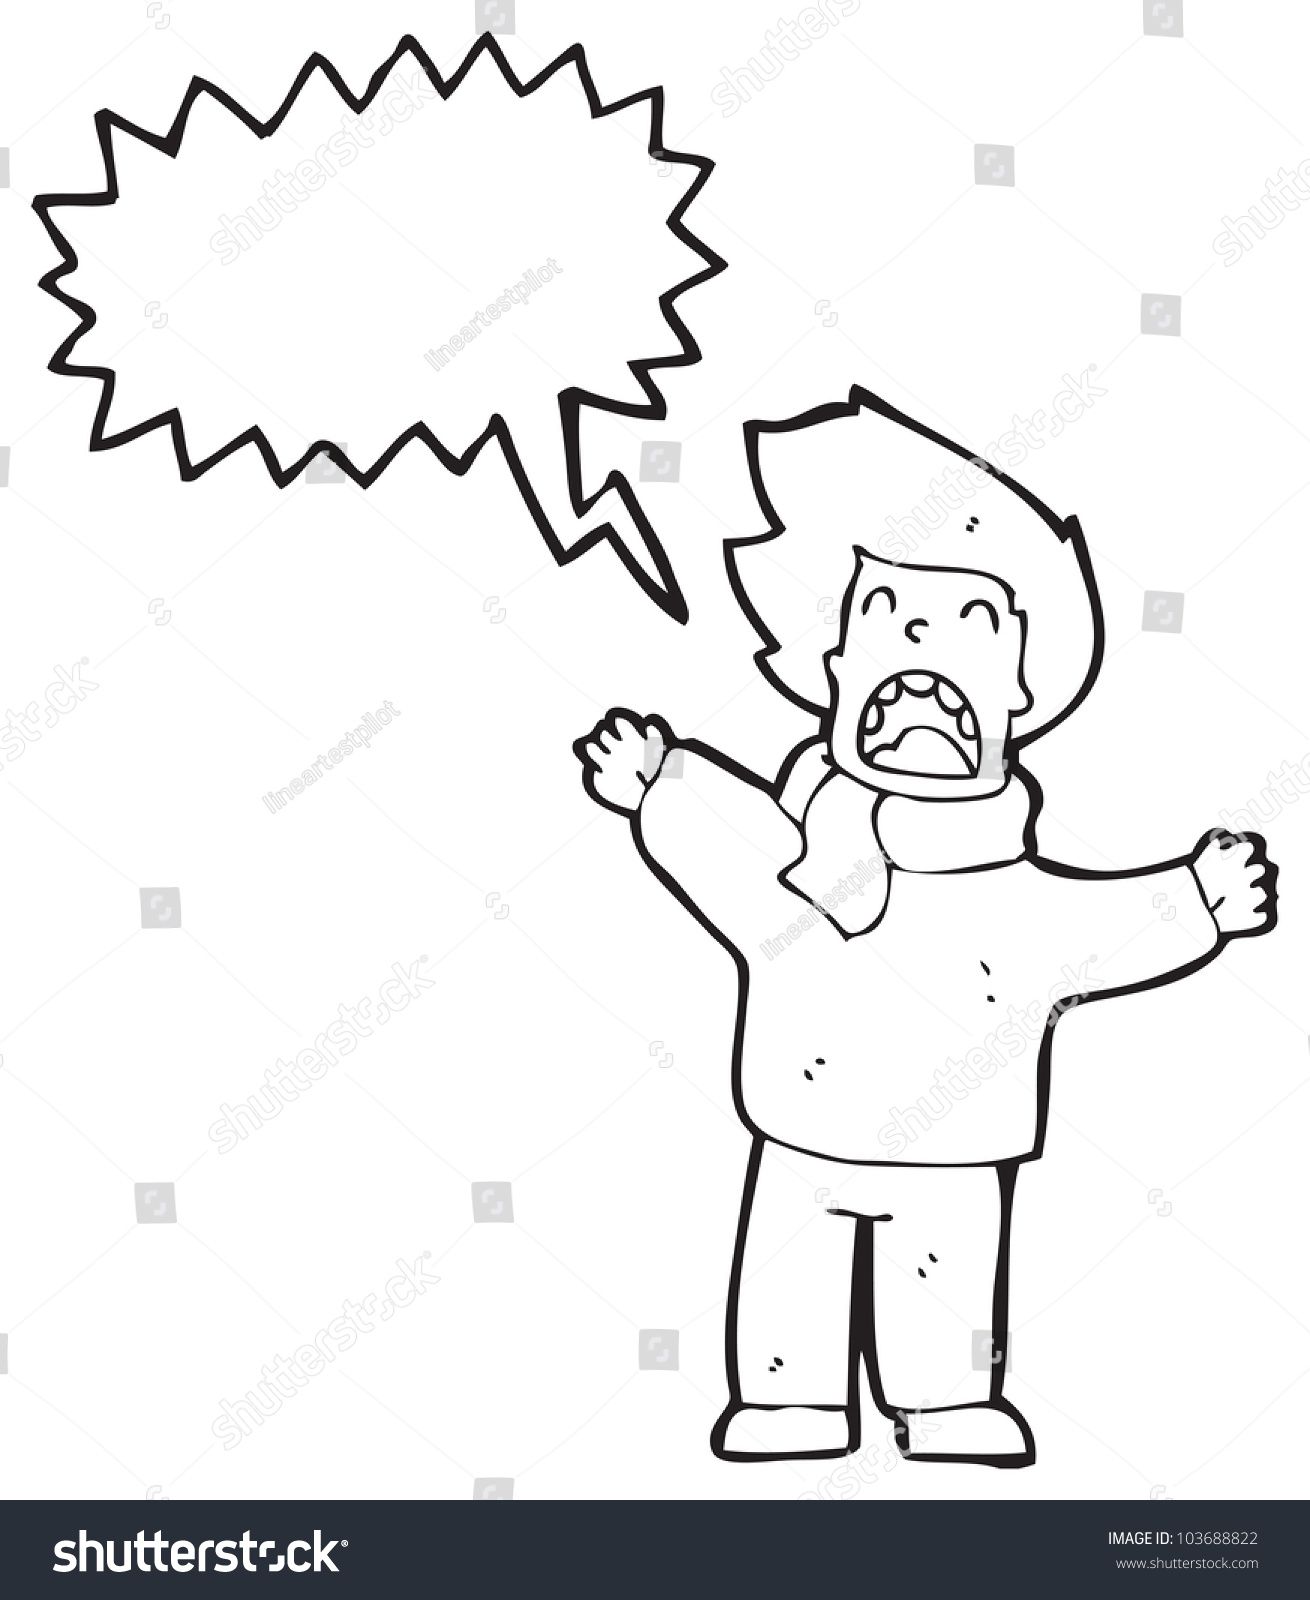 Cartoon Yelling Man Stock Photo 103688822 : Shutterstock